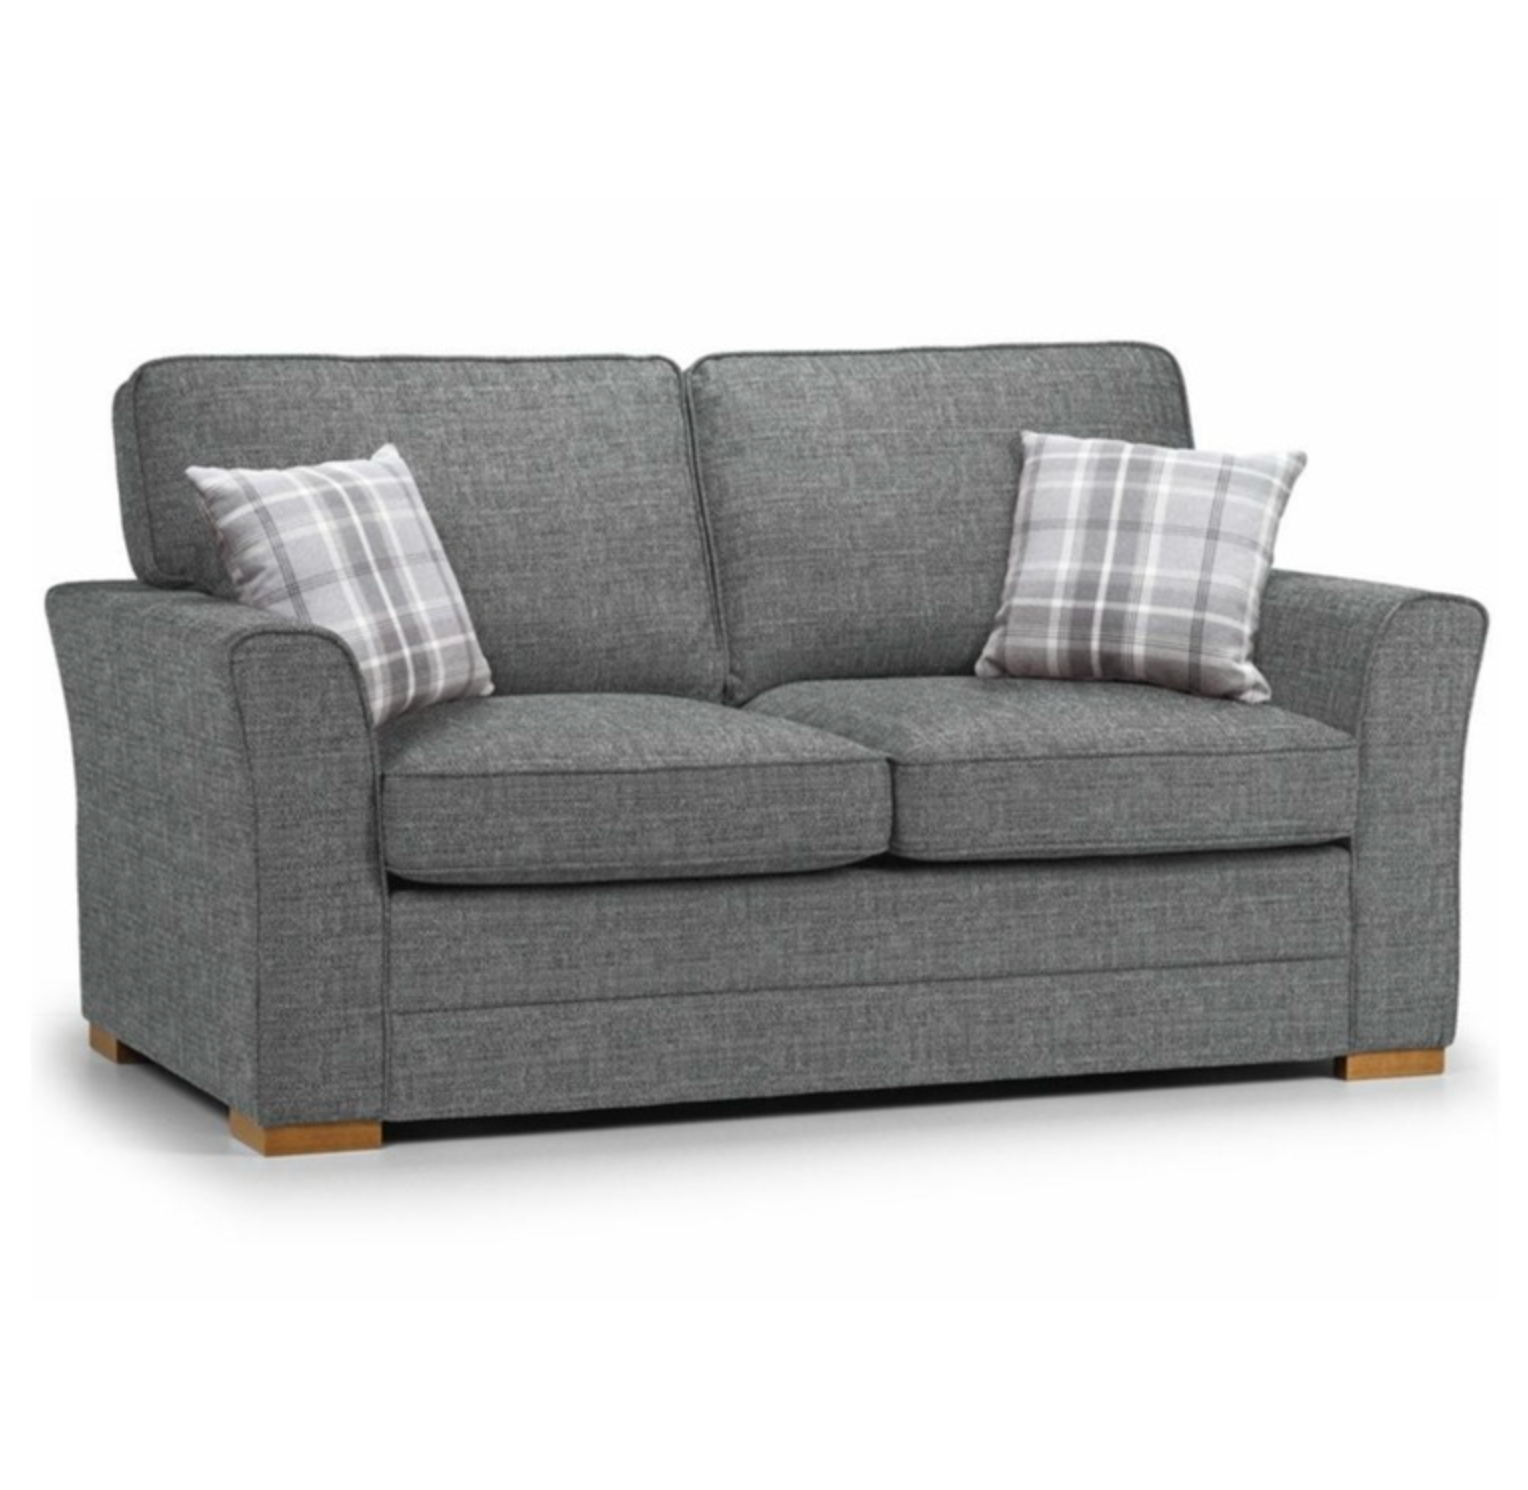 Chloe 2 Seater Sofa Grey Fabric